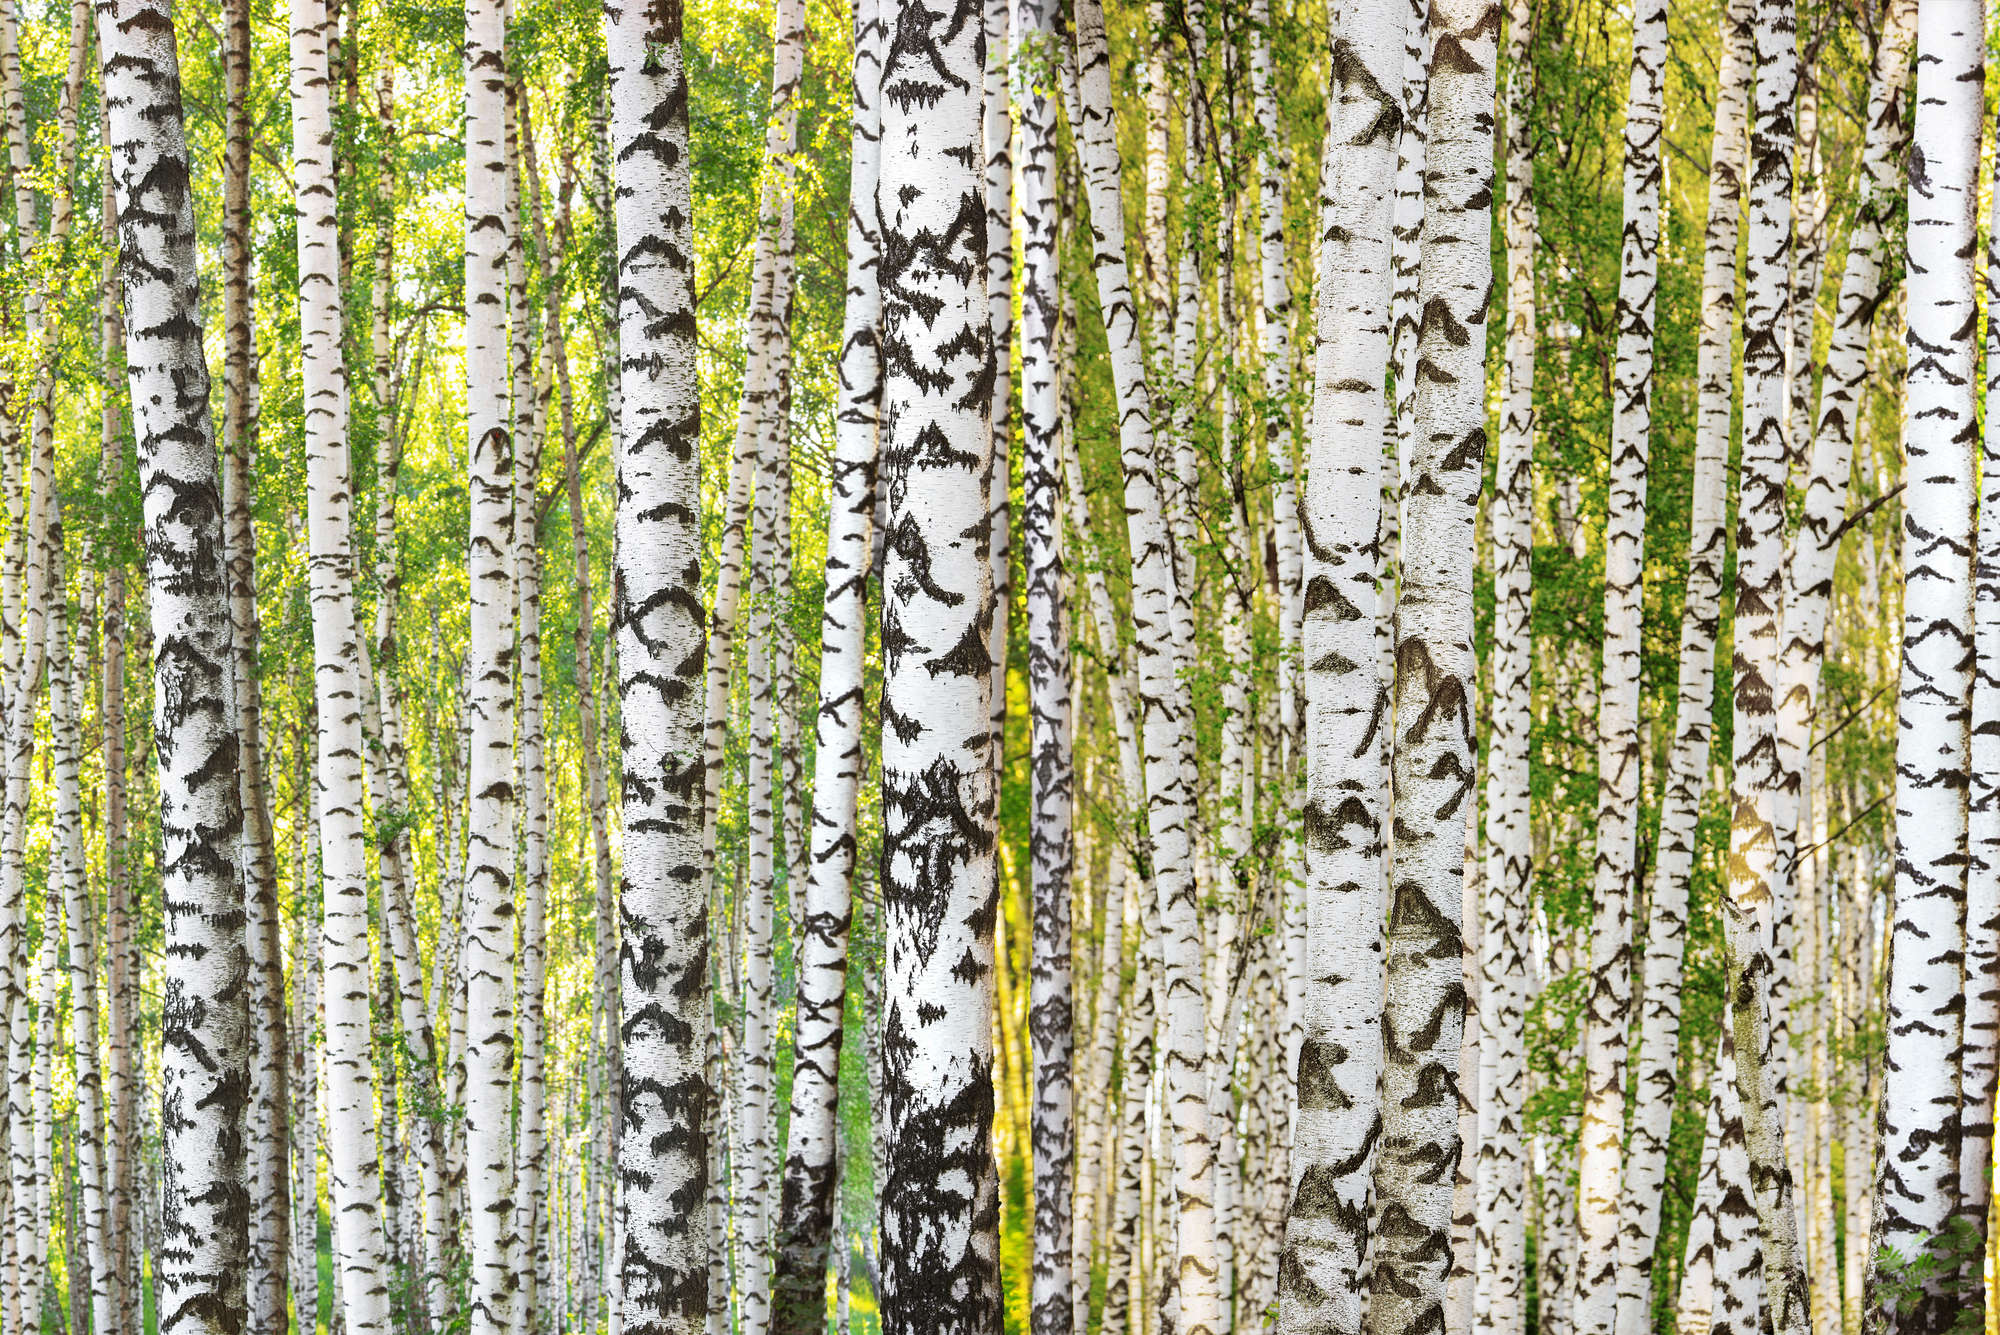             Carta da parati foresta di betulle motivo tronco d'albero su tessuto liscio opaco
        